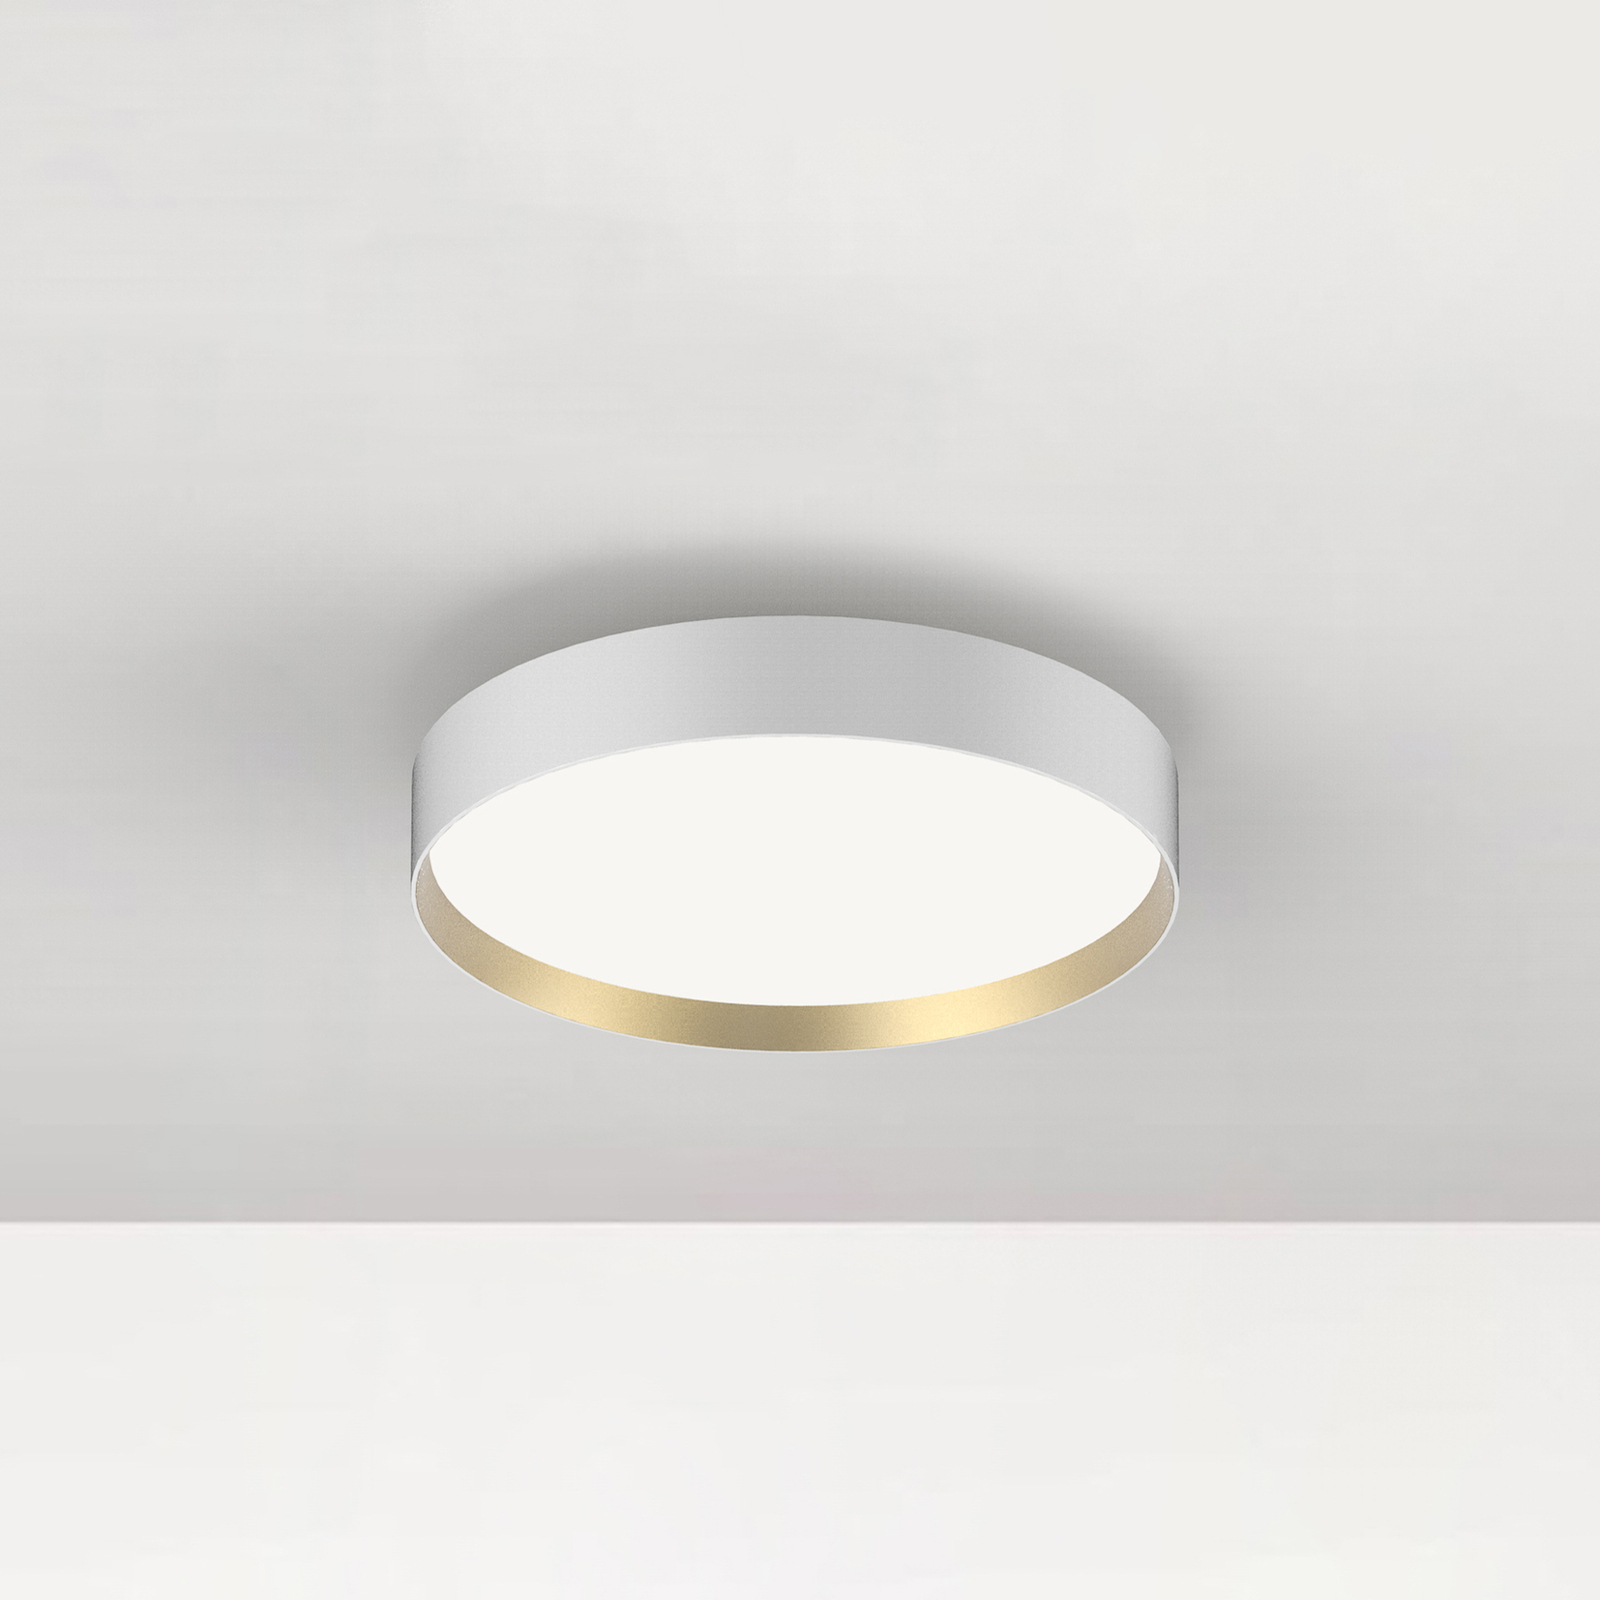 LOOM DESIGN Lucia LED plafondlamp Ø35cm wit/goud